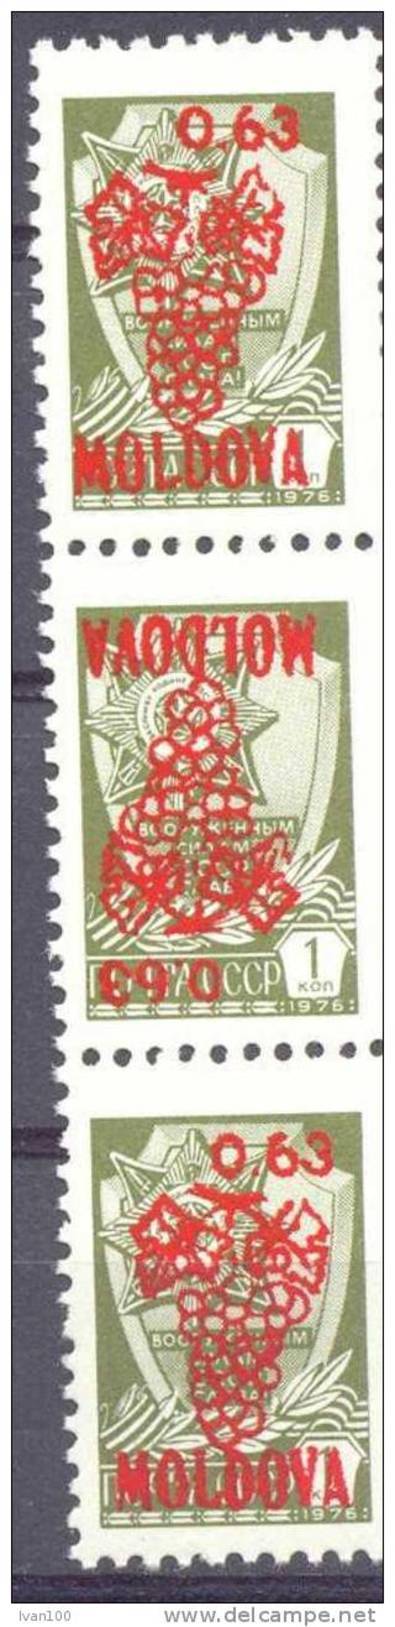 1992. Moldova, OP Grape, ERROR, OP Invert In Strip With 2 Normal Stamps,  Mint/** - Moldavia